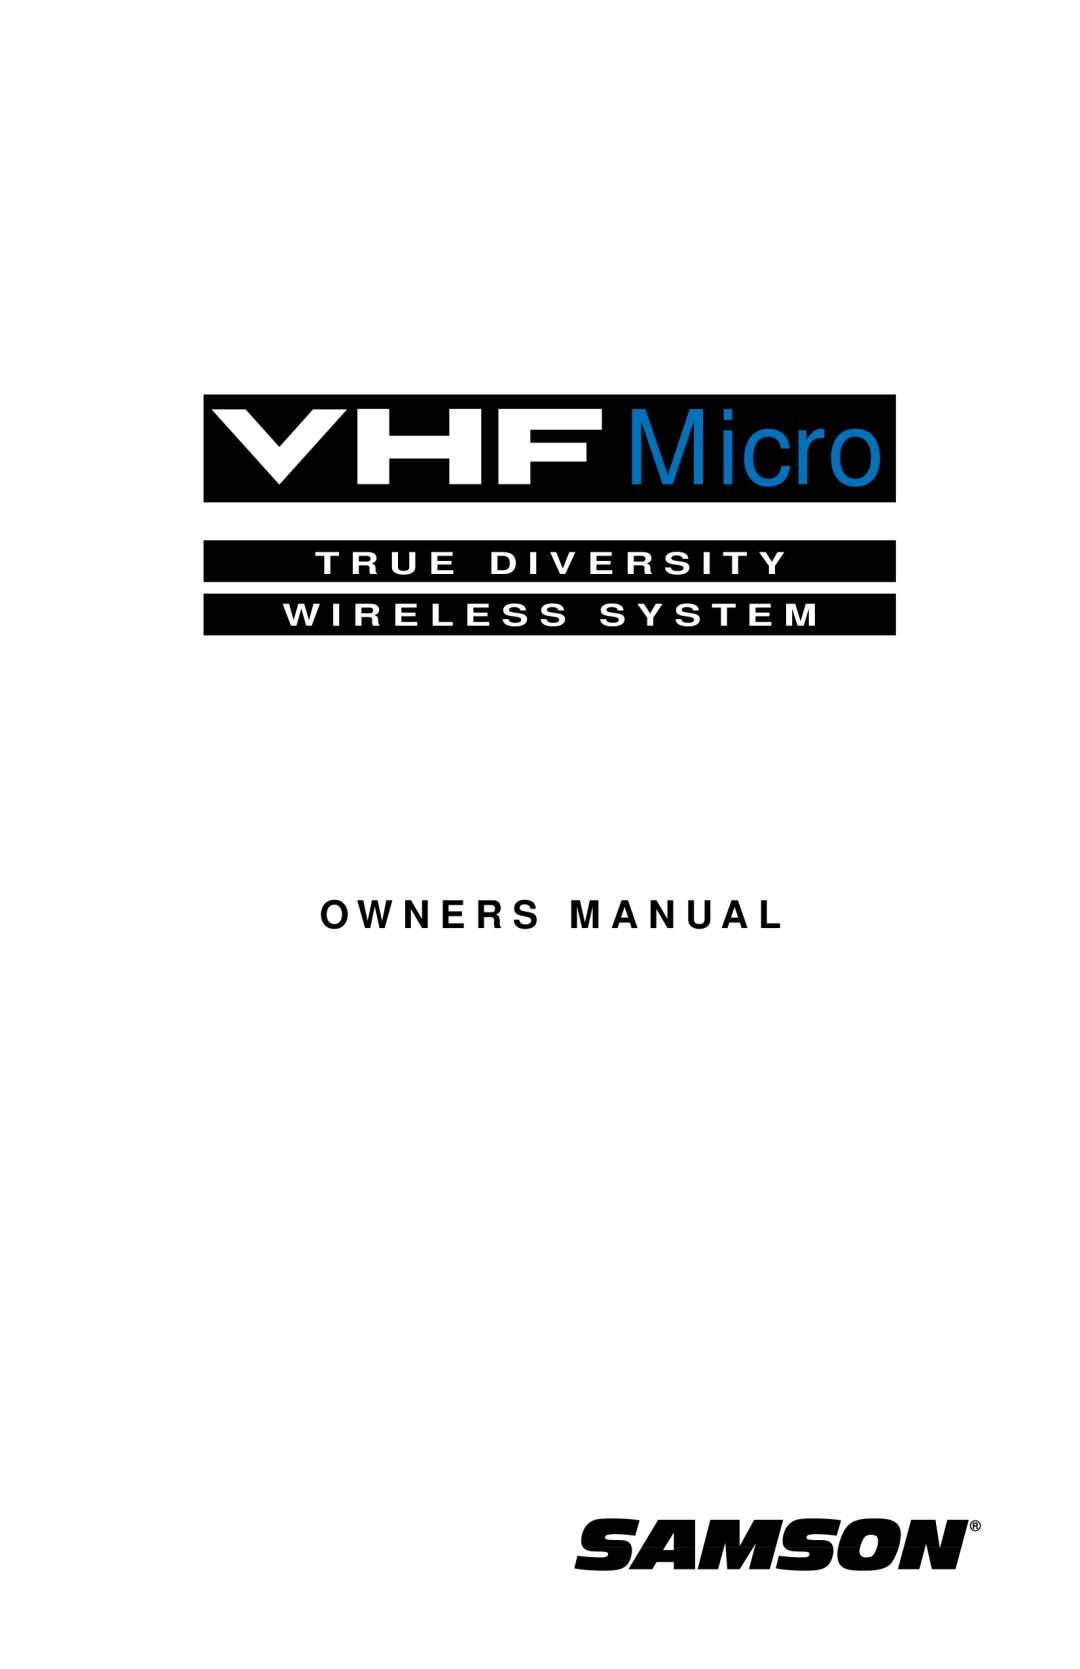 Samson VHF Micro TRUE DIVERSITY WIRELESS owner manual O W N E R S M A N U A L, T R U E D I V E R S I T Y 